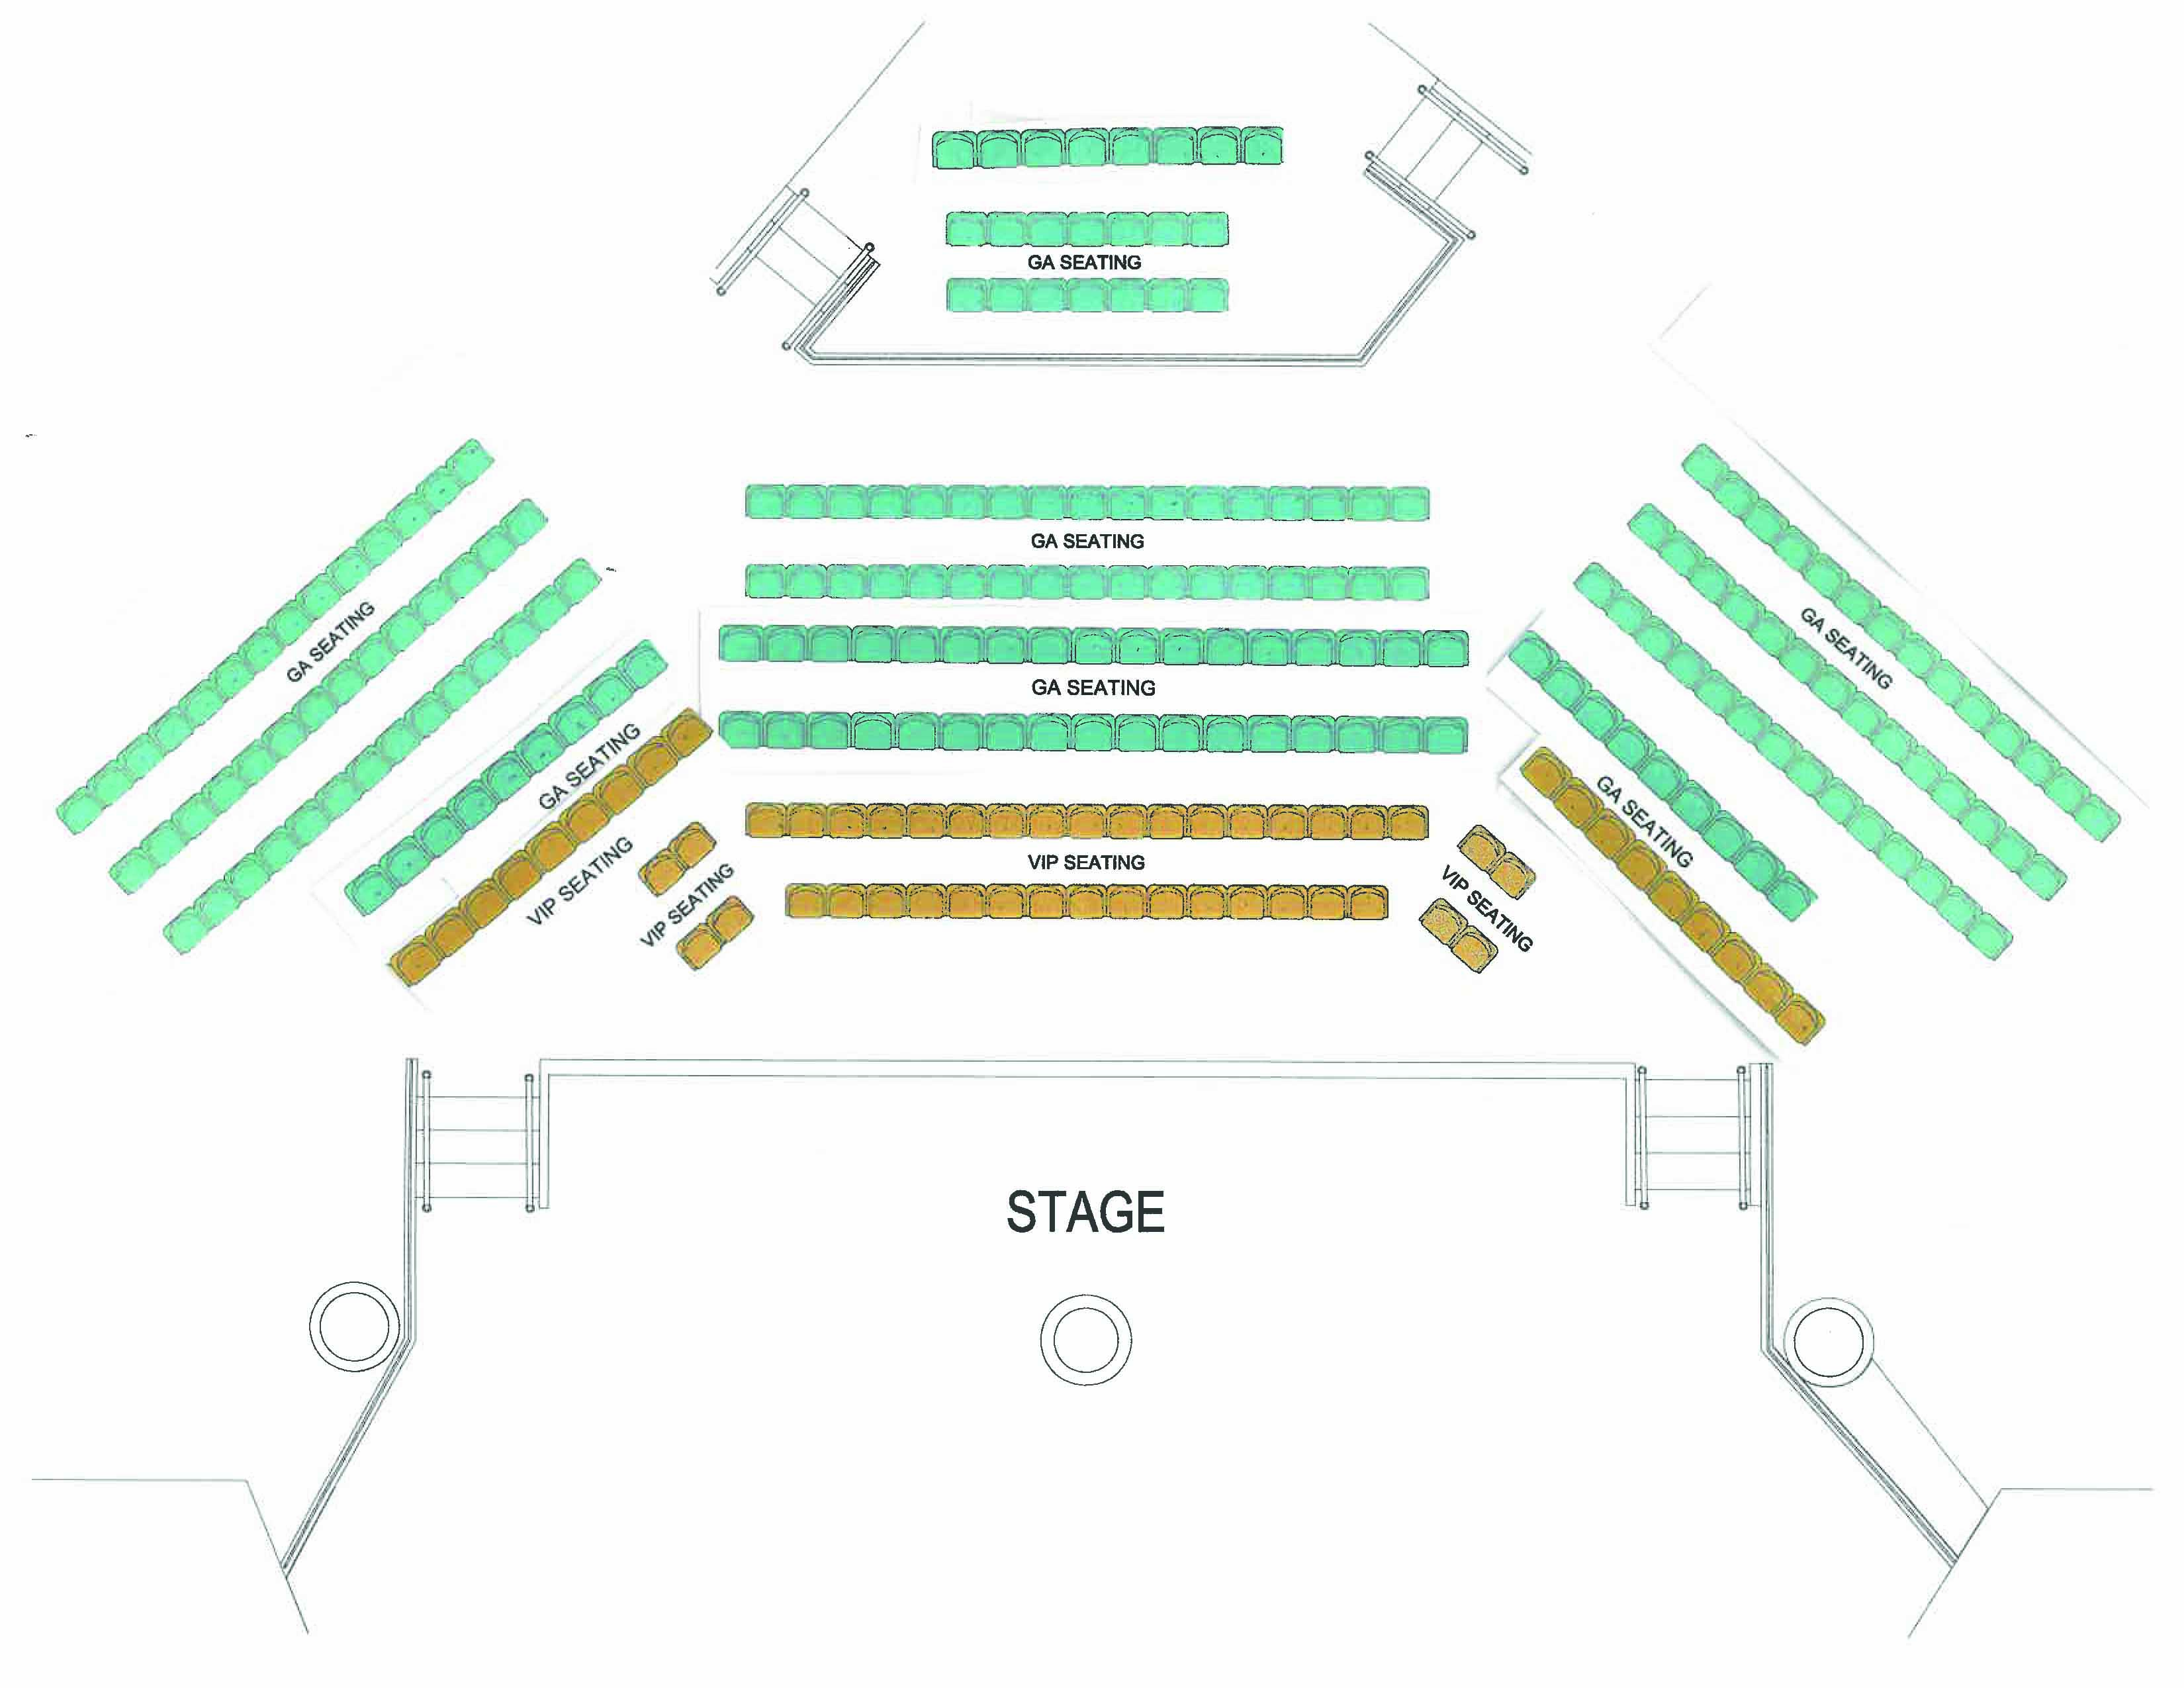 The Chelsea Las Vegas Seating Chart